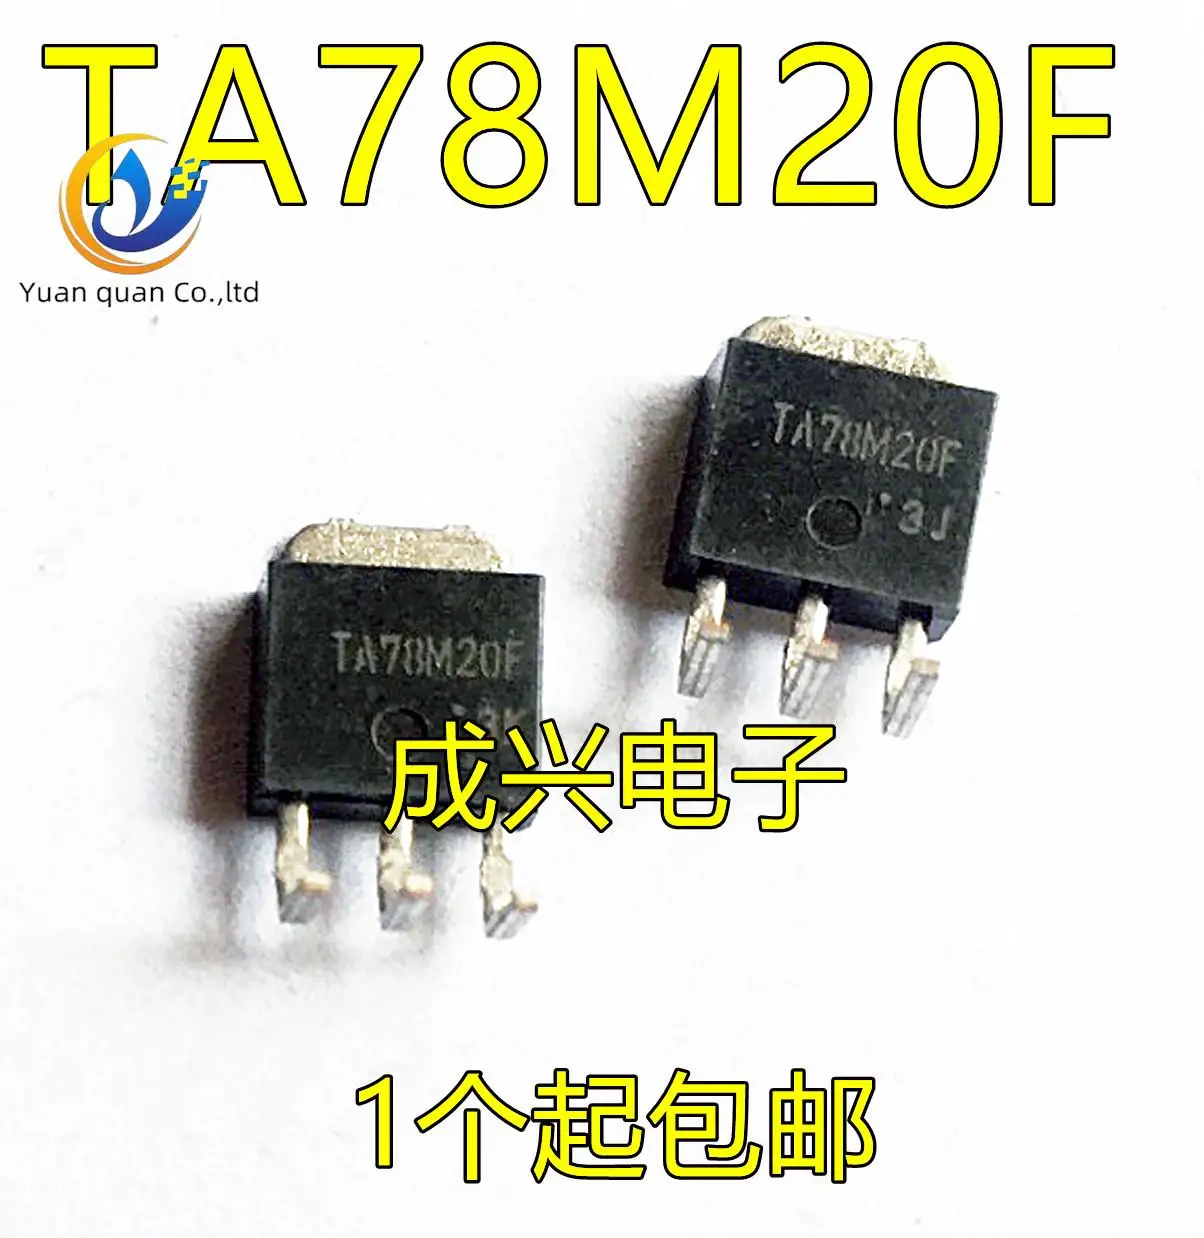 30pcs original new TA78M20F 78M20 TO252 voltage regulator transistor chip triode